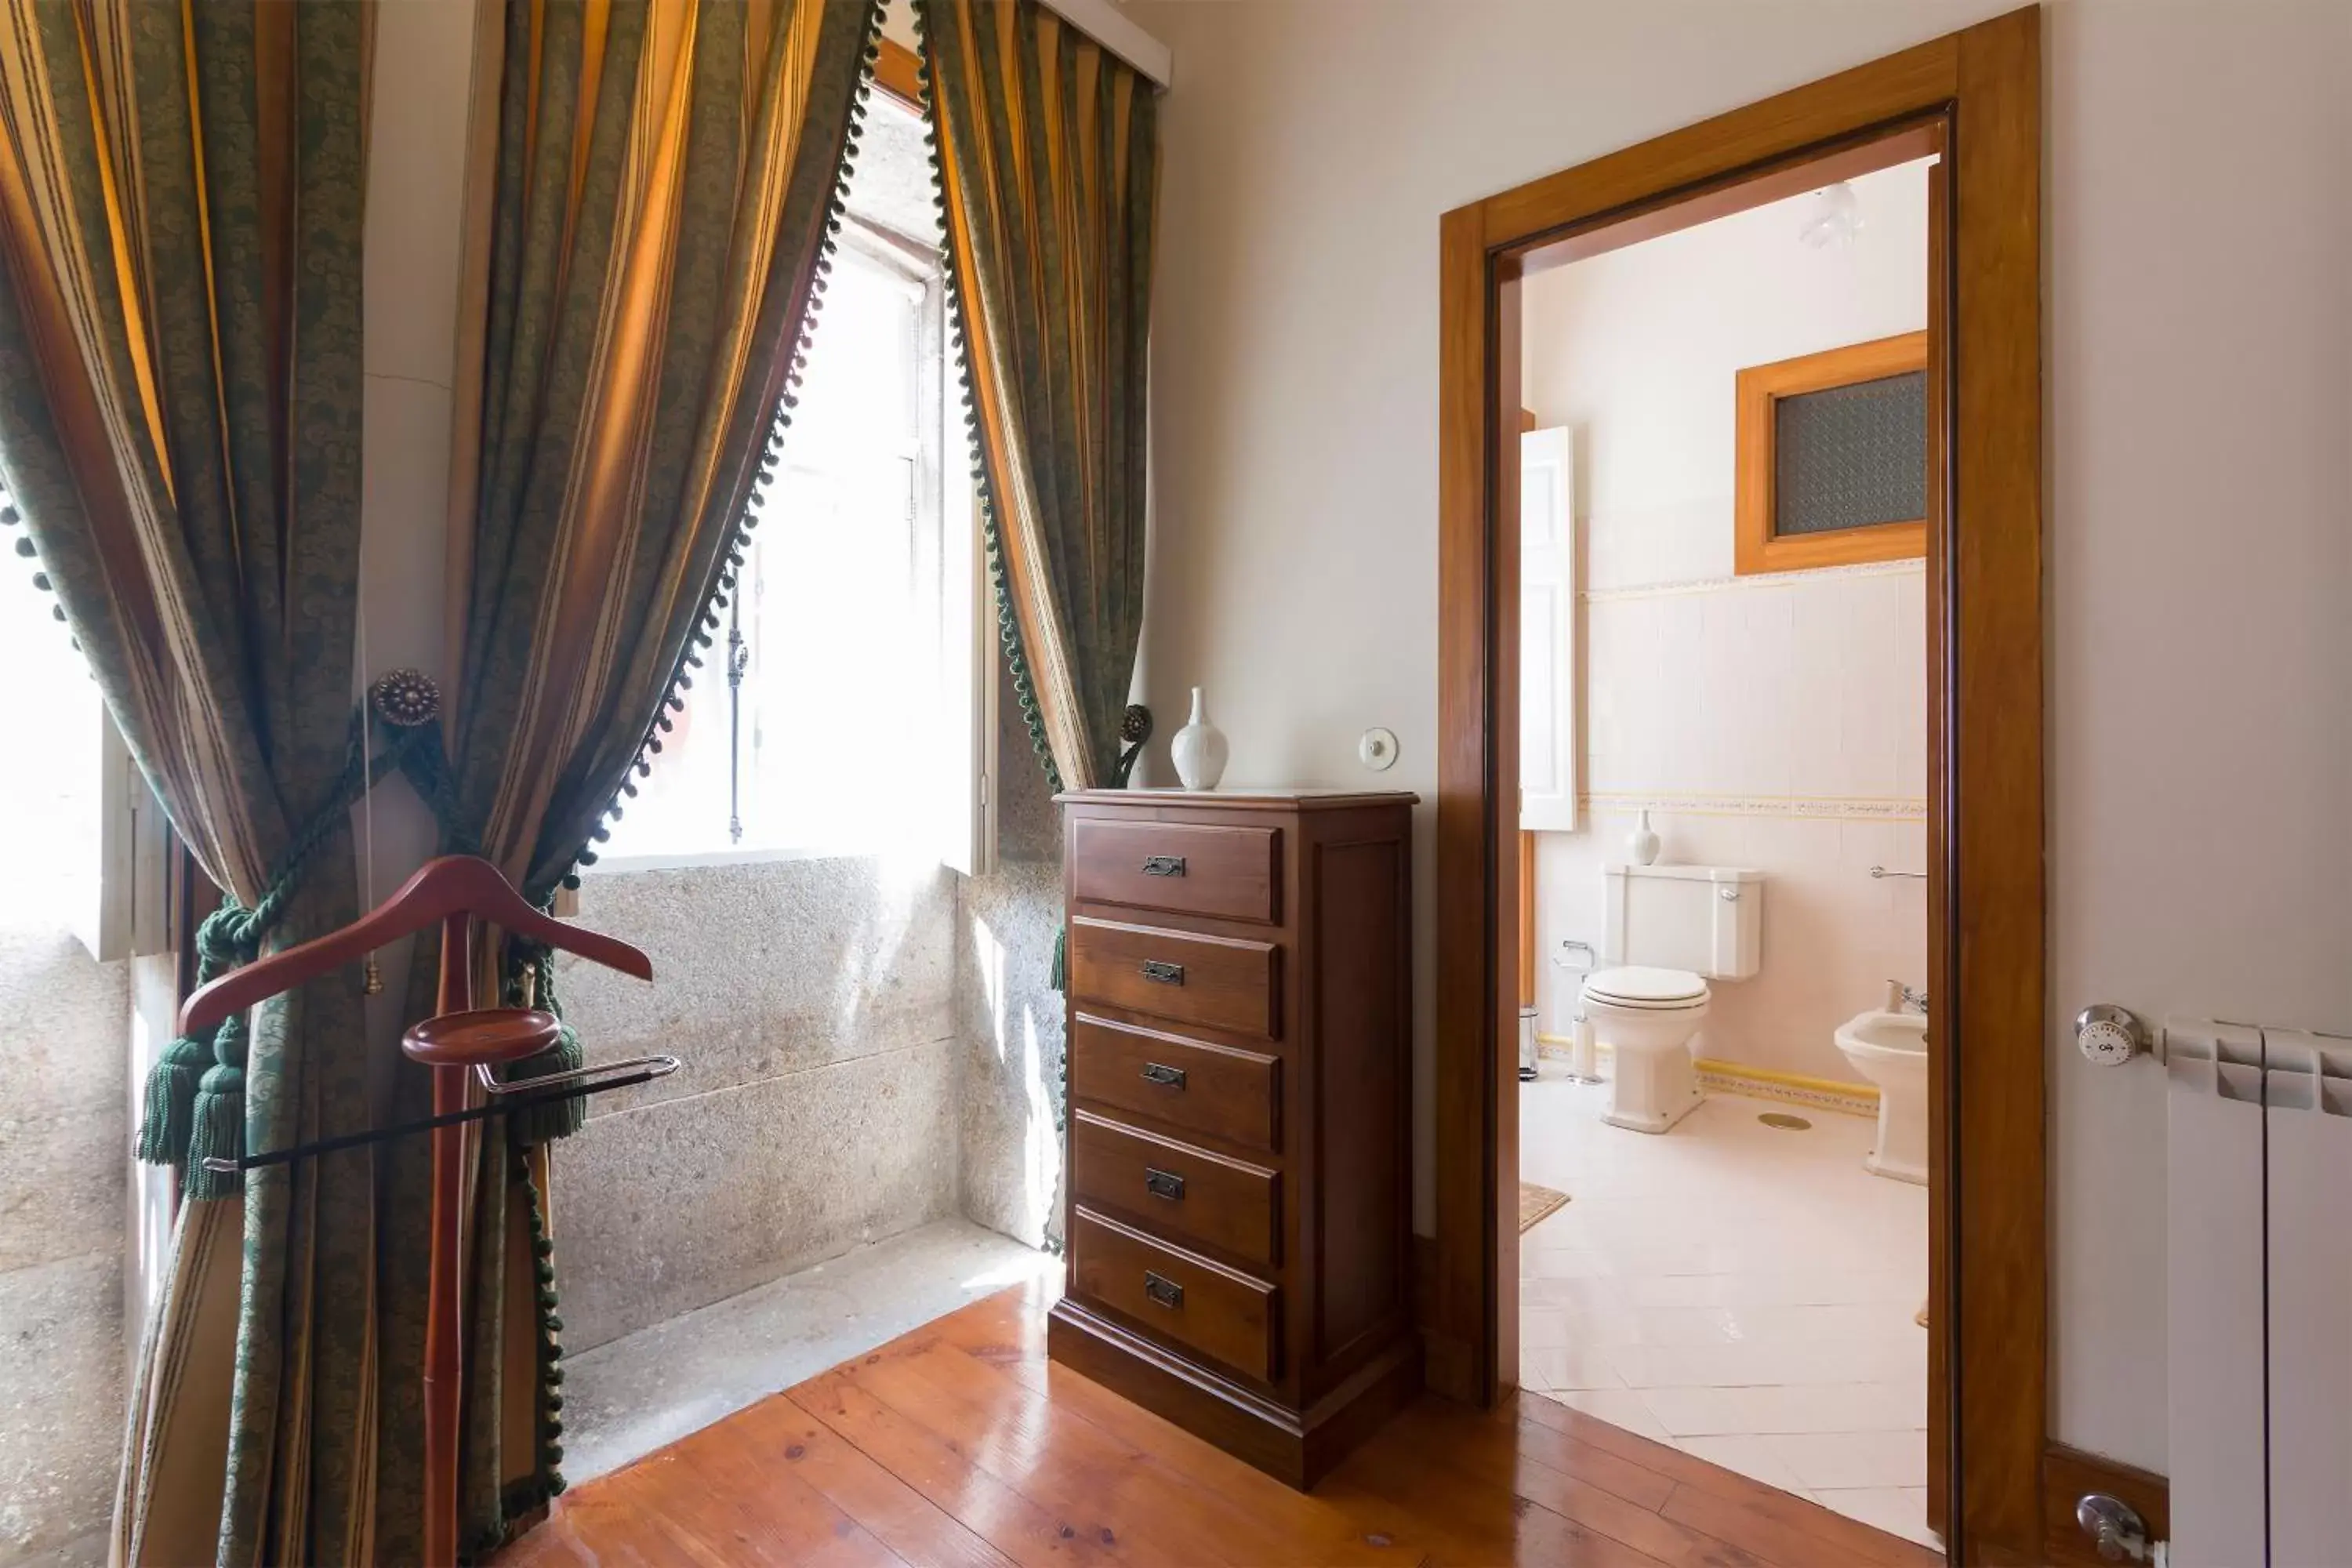 Bathroom in Quinta São Francisco Rural Resort - Regina Hotel Group